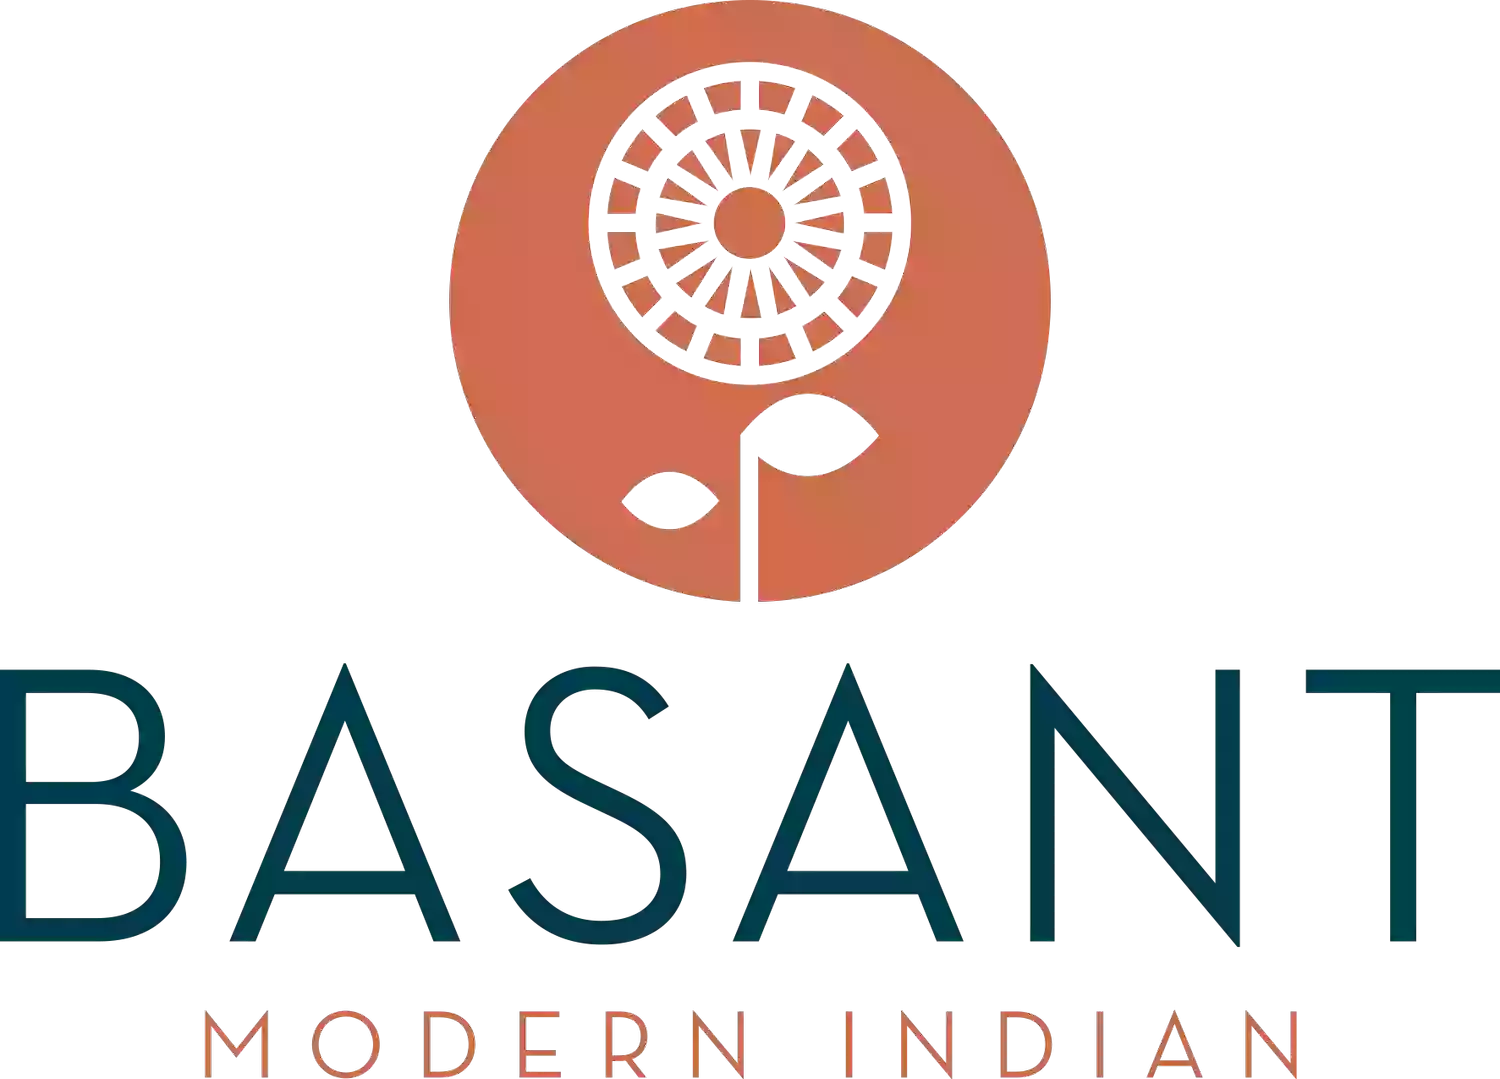 Basant Modern Indian Restaurant